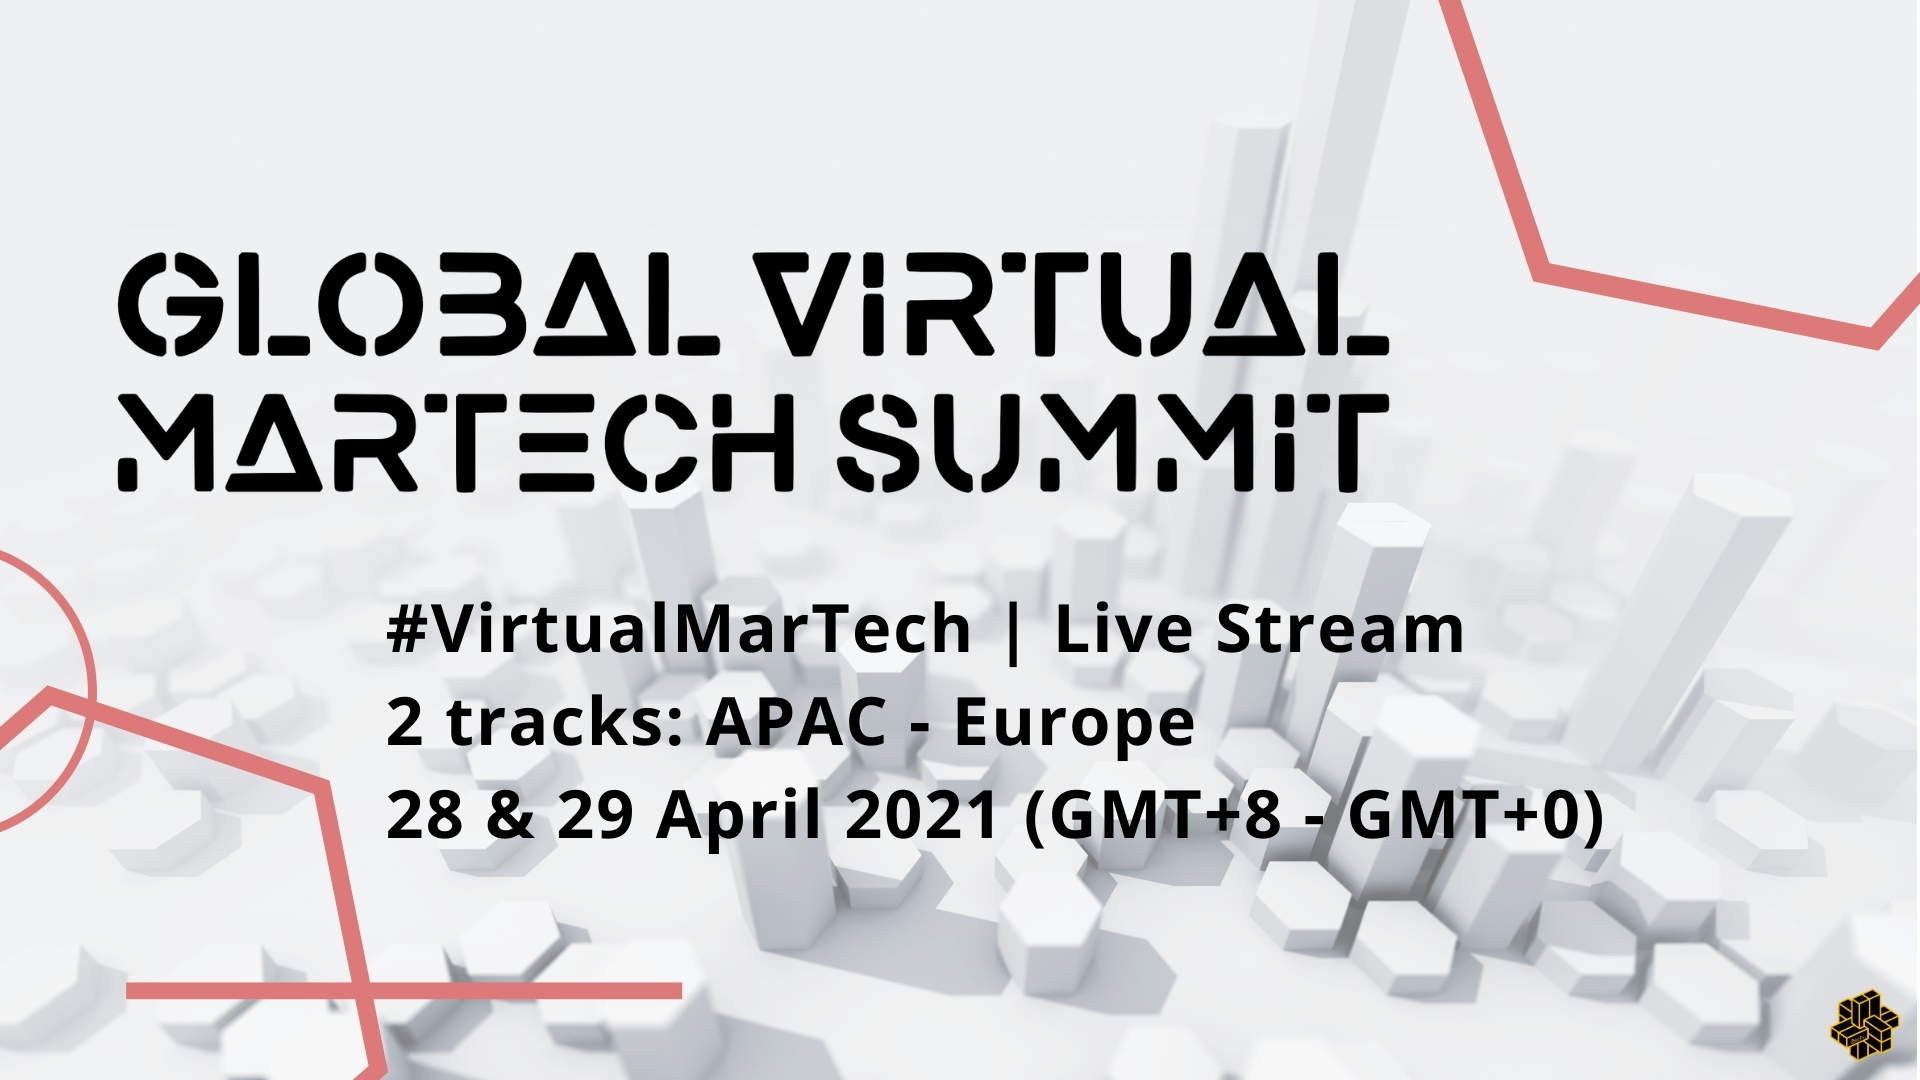 Global Virtual MarTech Summit Europe organized by BEETc